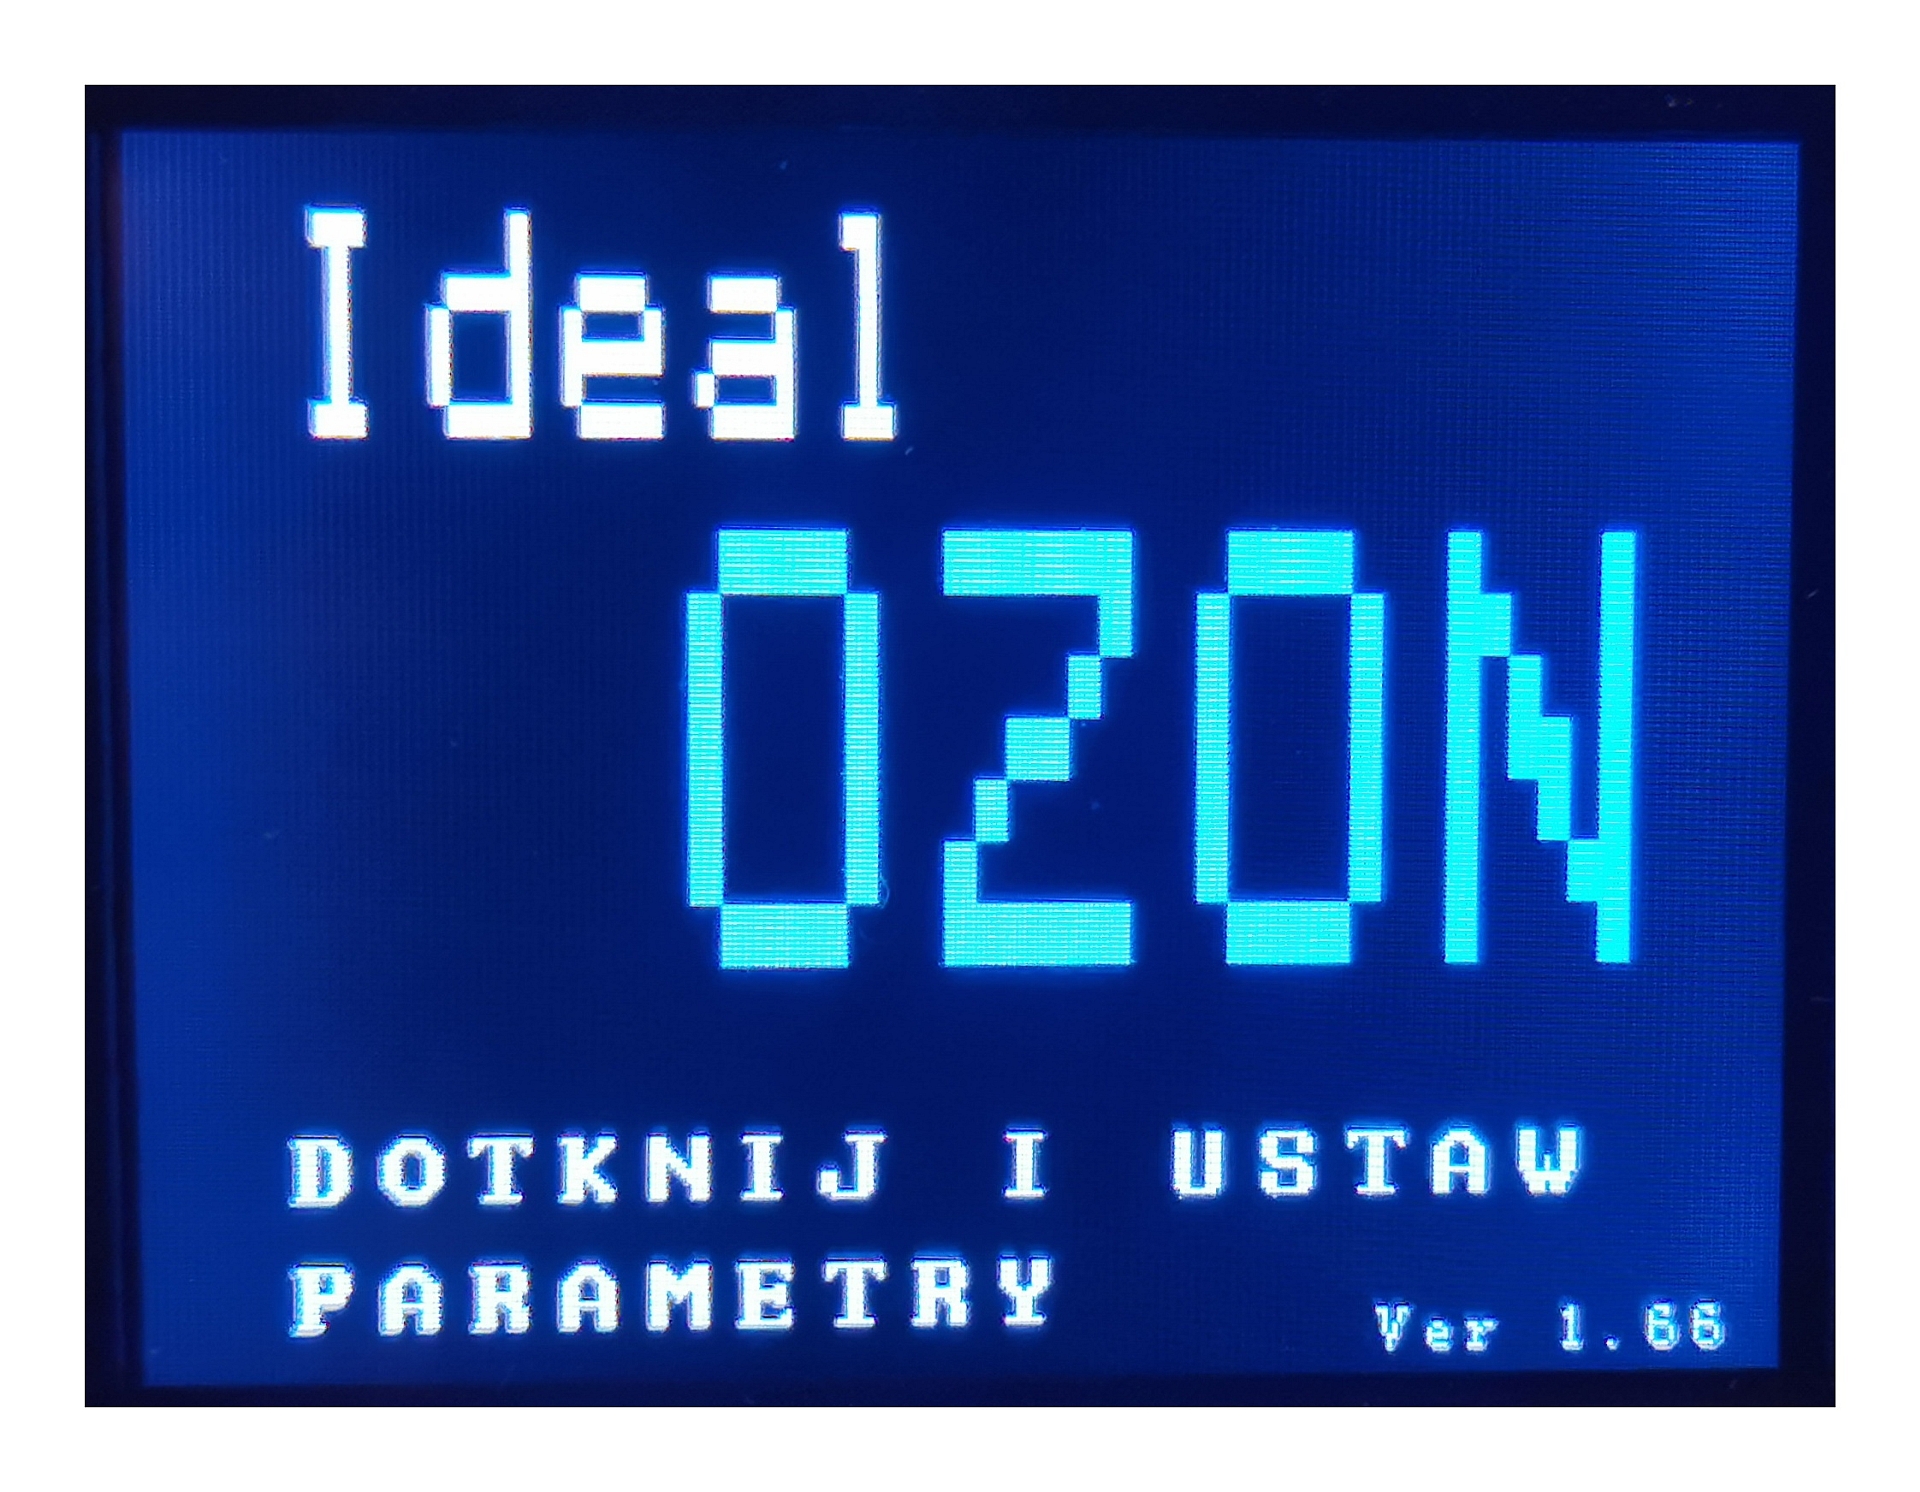 Generator ozonu/ozonator-panel sterowania V2 ozonatora IdealOZON.pl Platinum Quartz